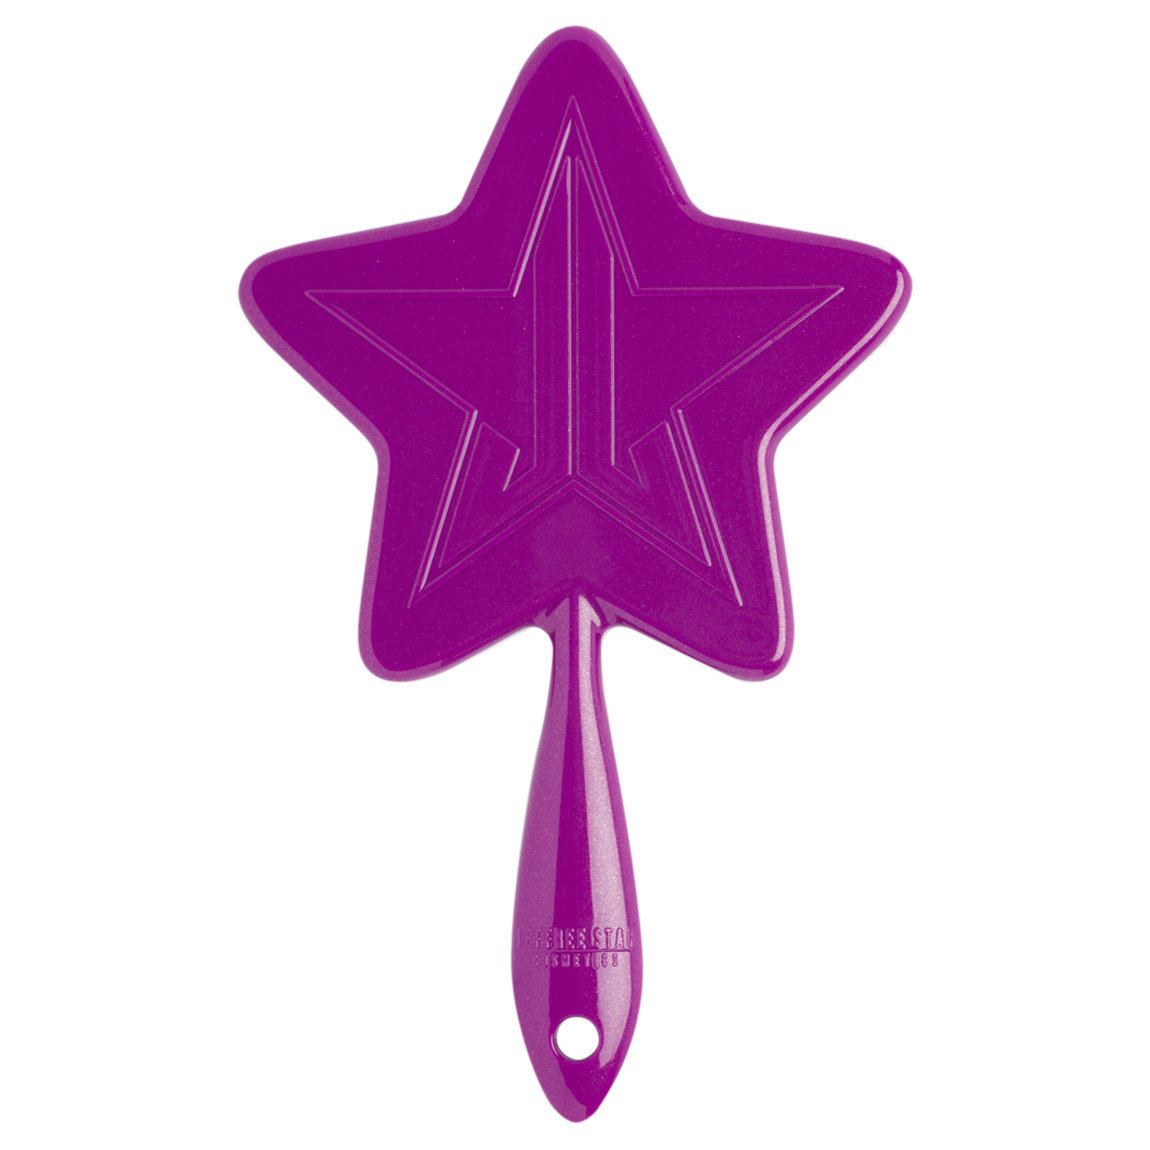 Jeffree Star Cosmetics Star Mirror Purple Glitter alternative view 1 - product swatch.